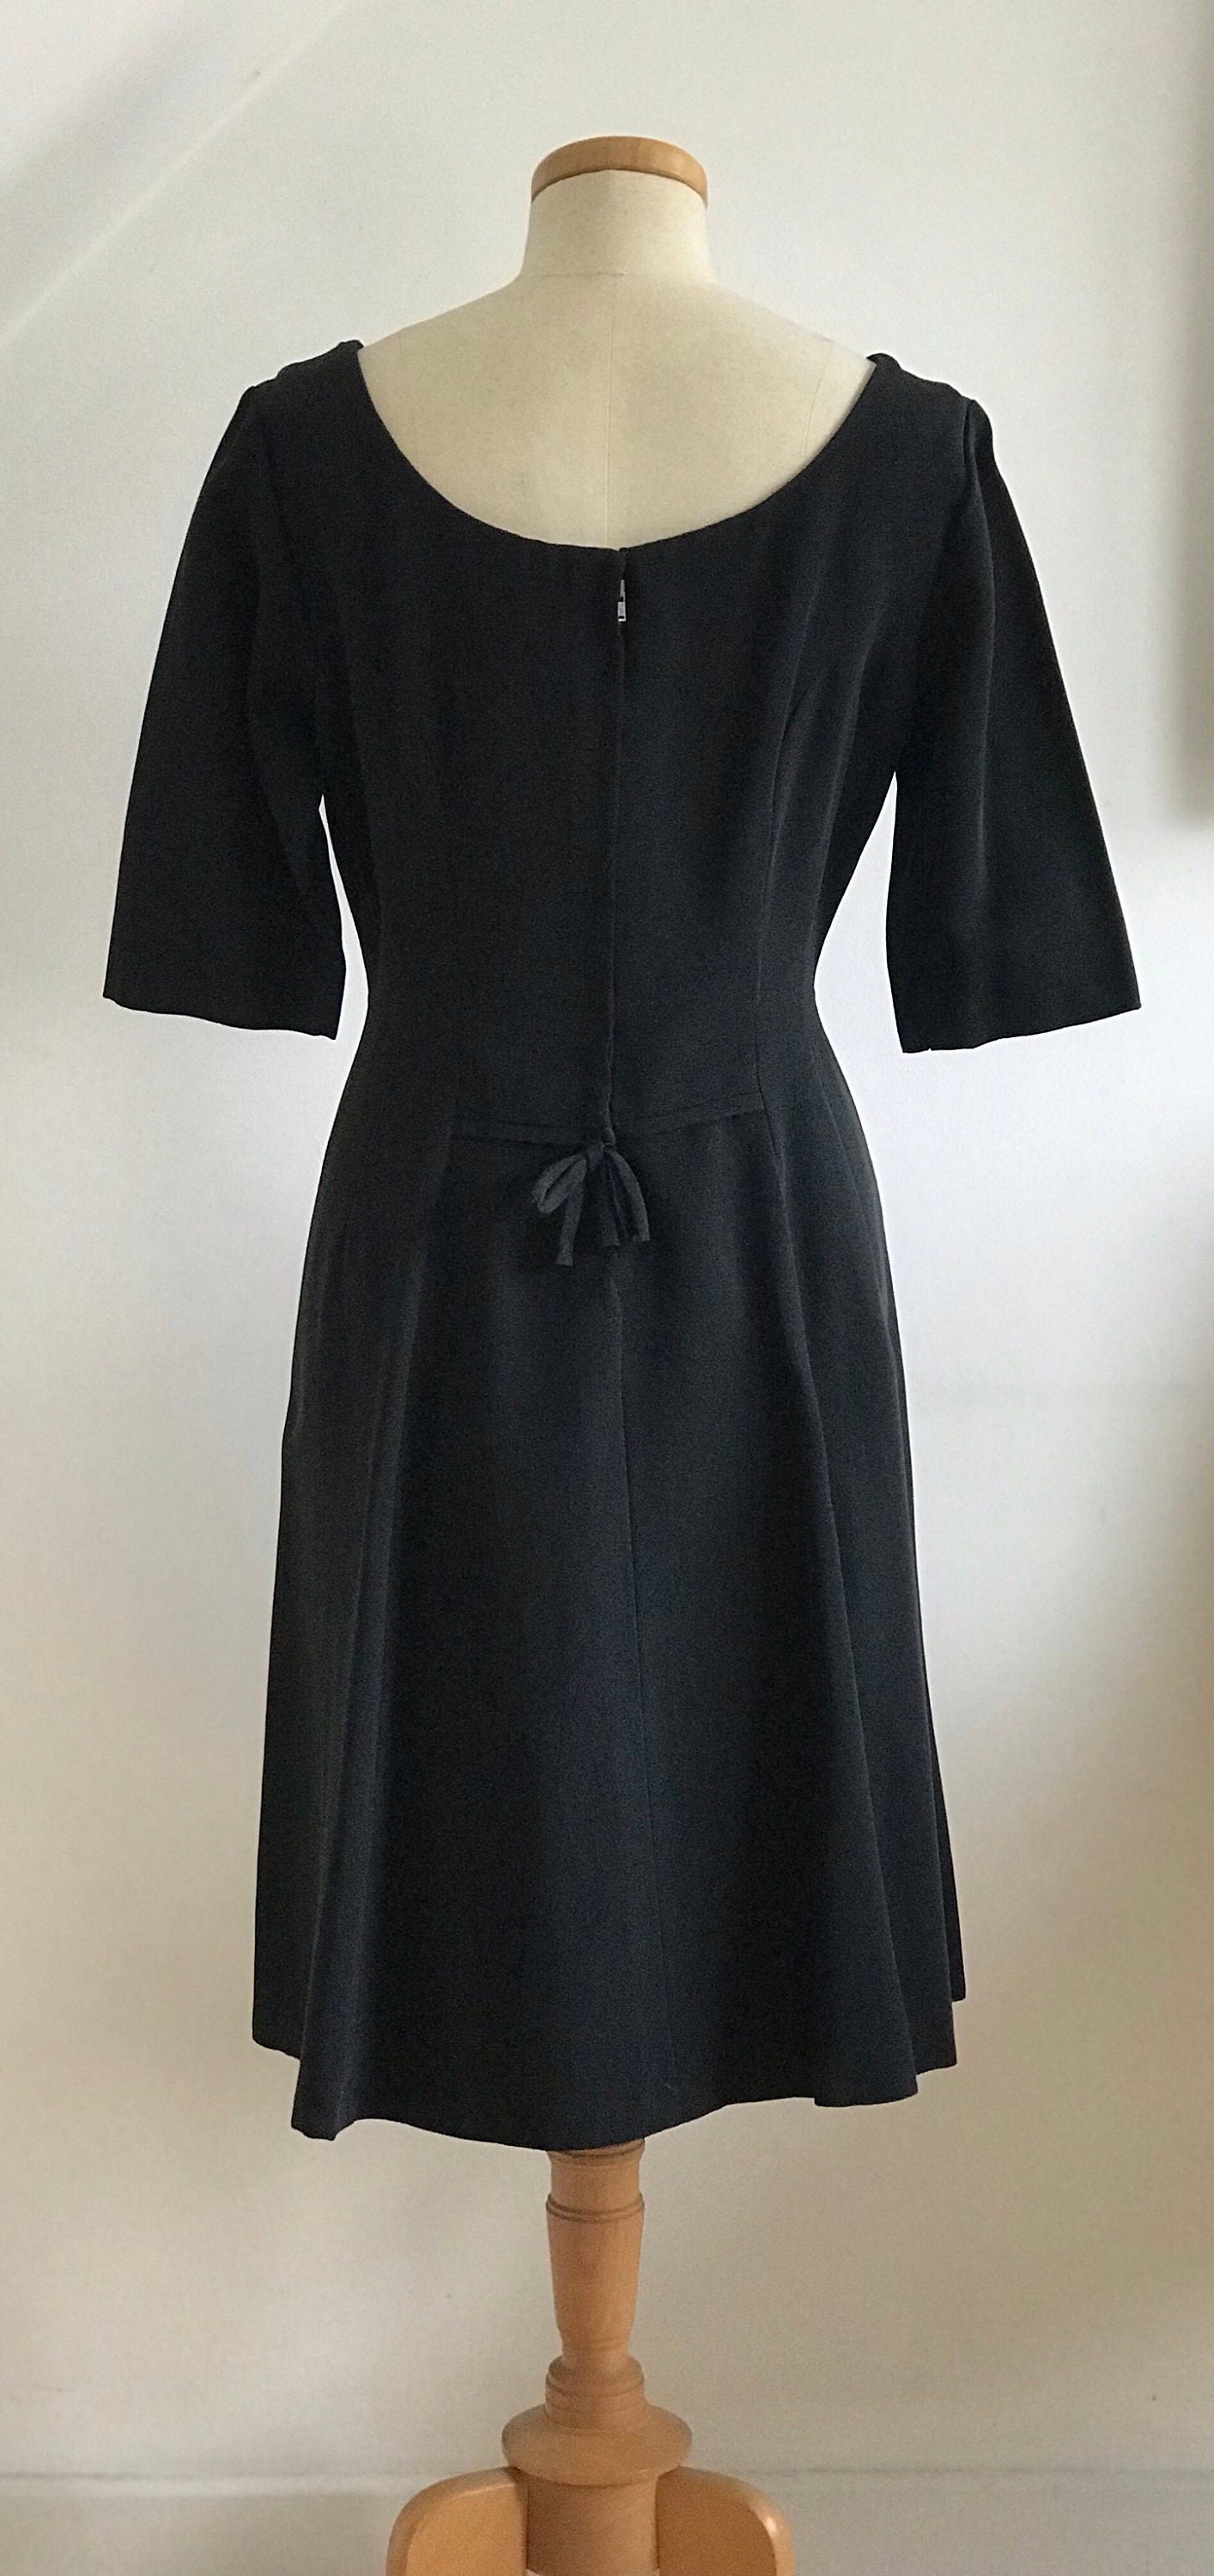 Stunning 1950s Wiggle Dress Black Silk Jet Droplets Fabulously Chic 50s ...